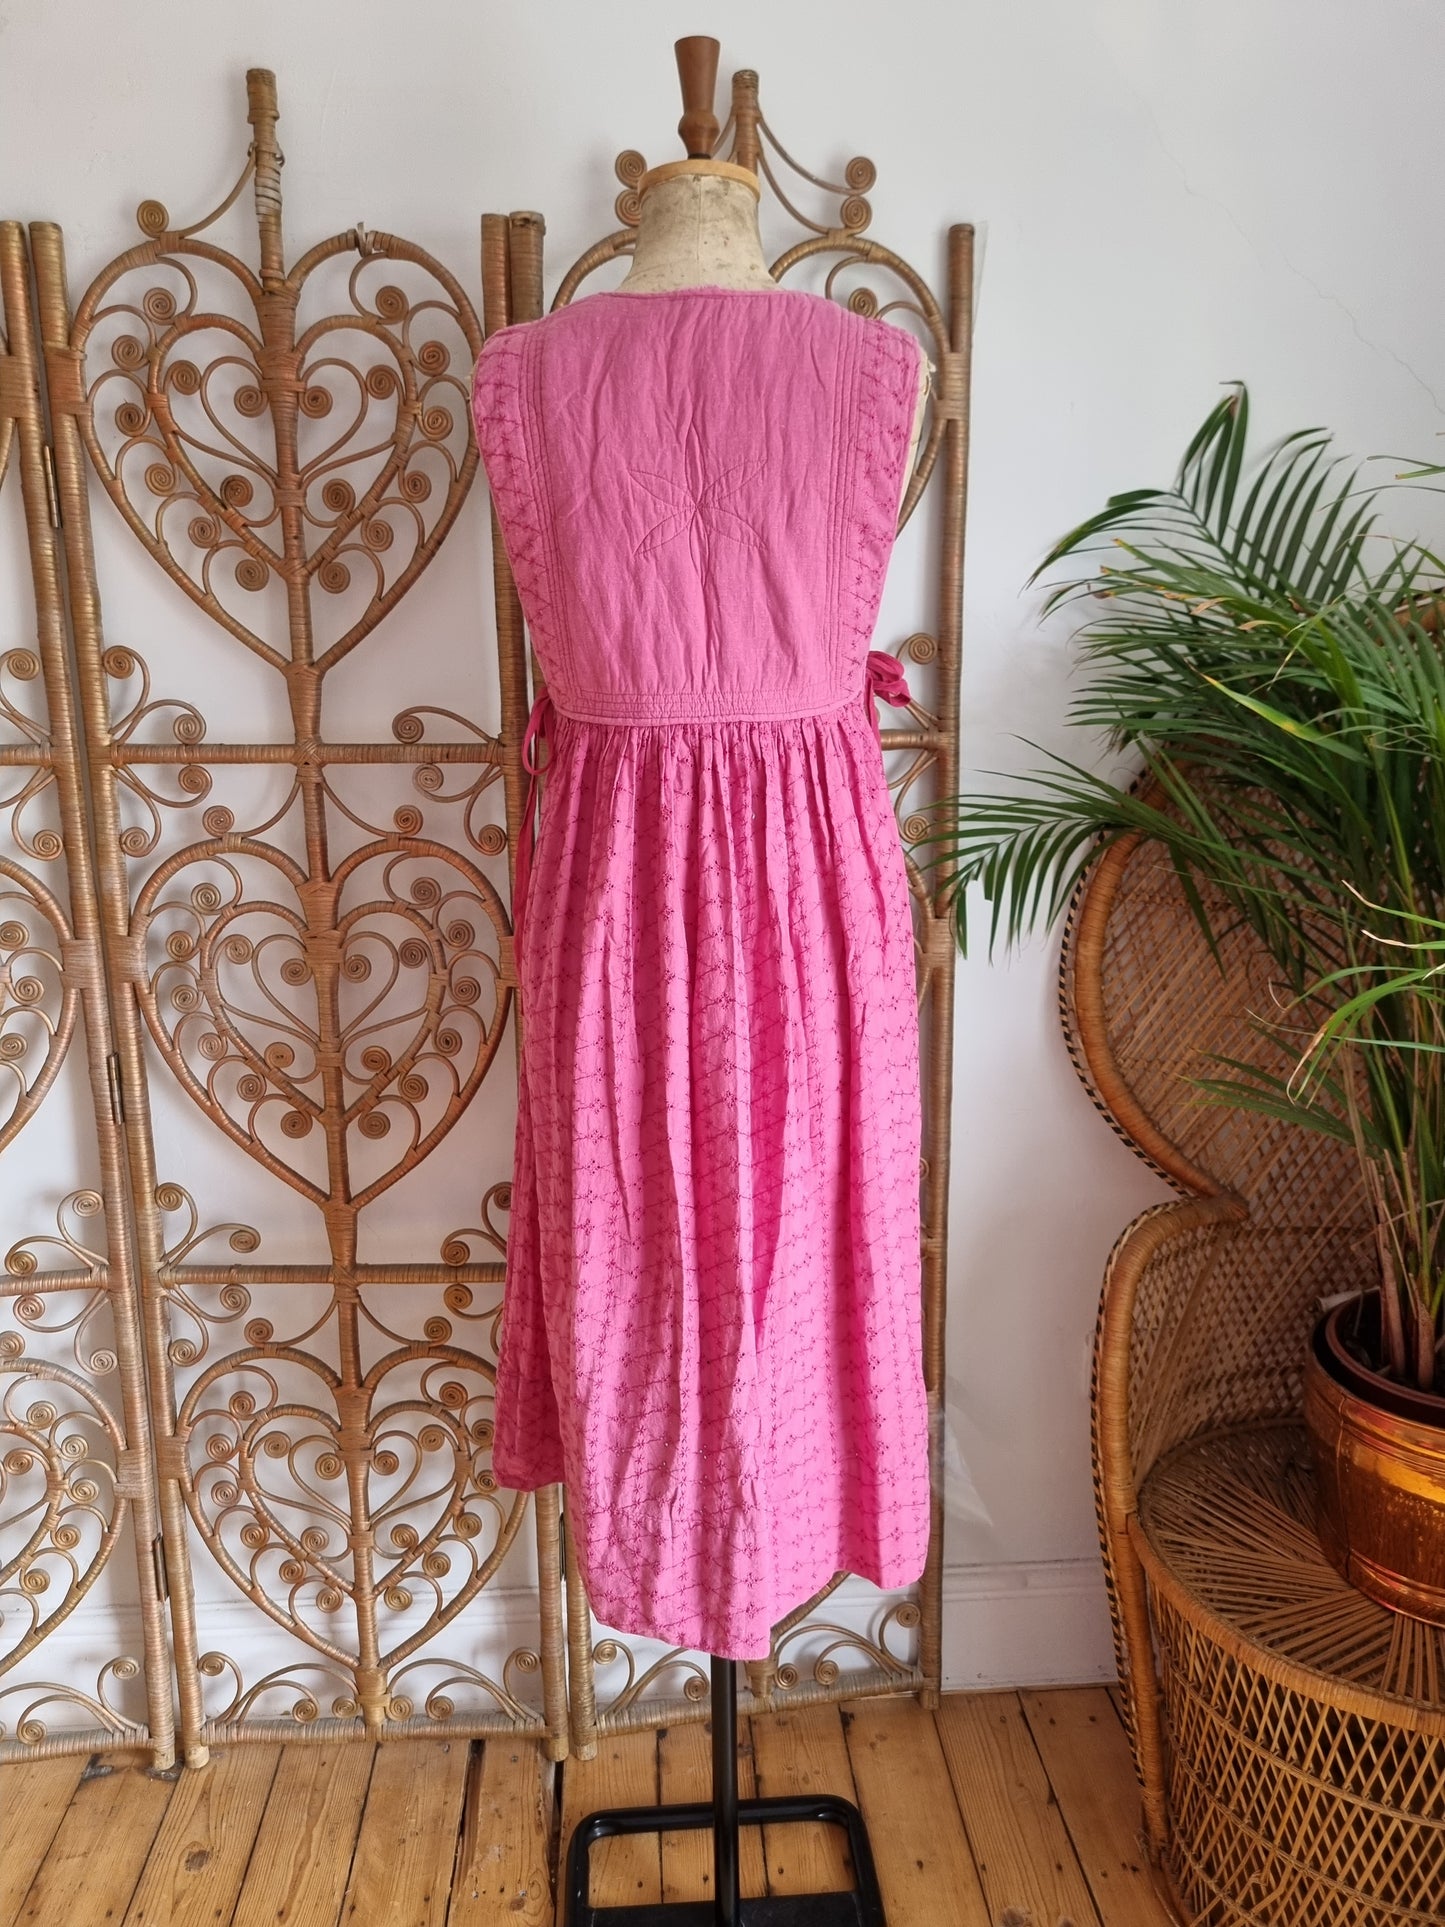 Vintage Pamul pinafore dress